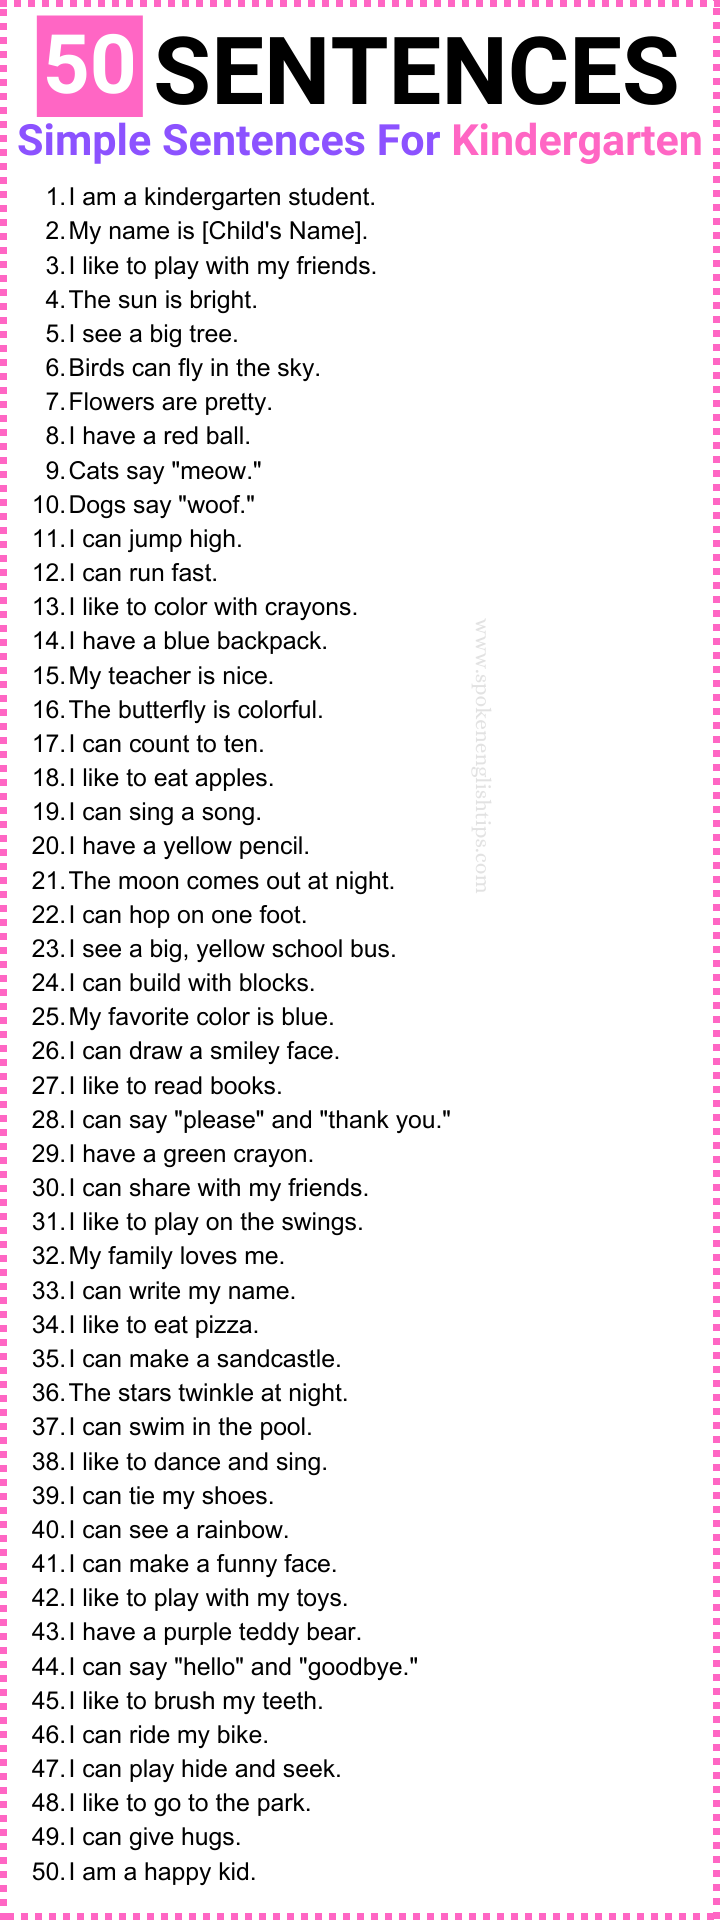 Simple Sentences For Kindergarten